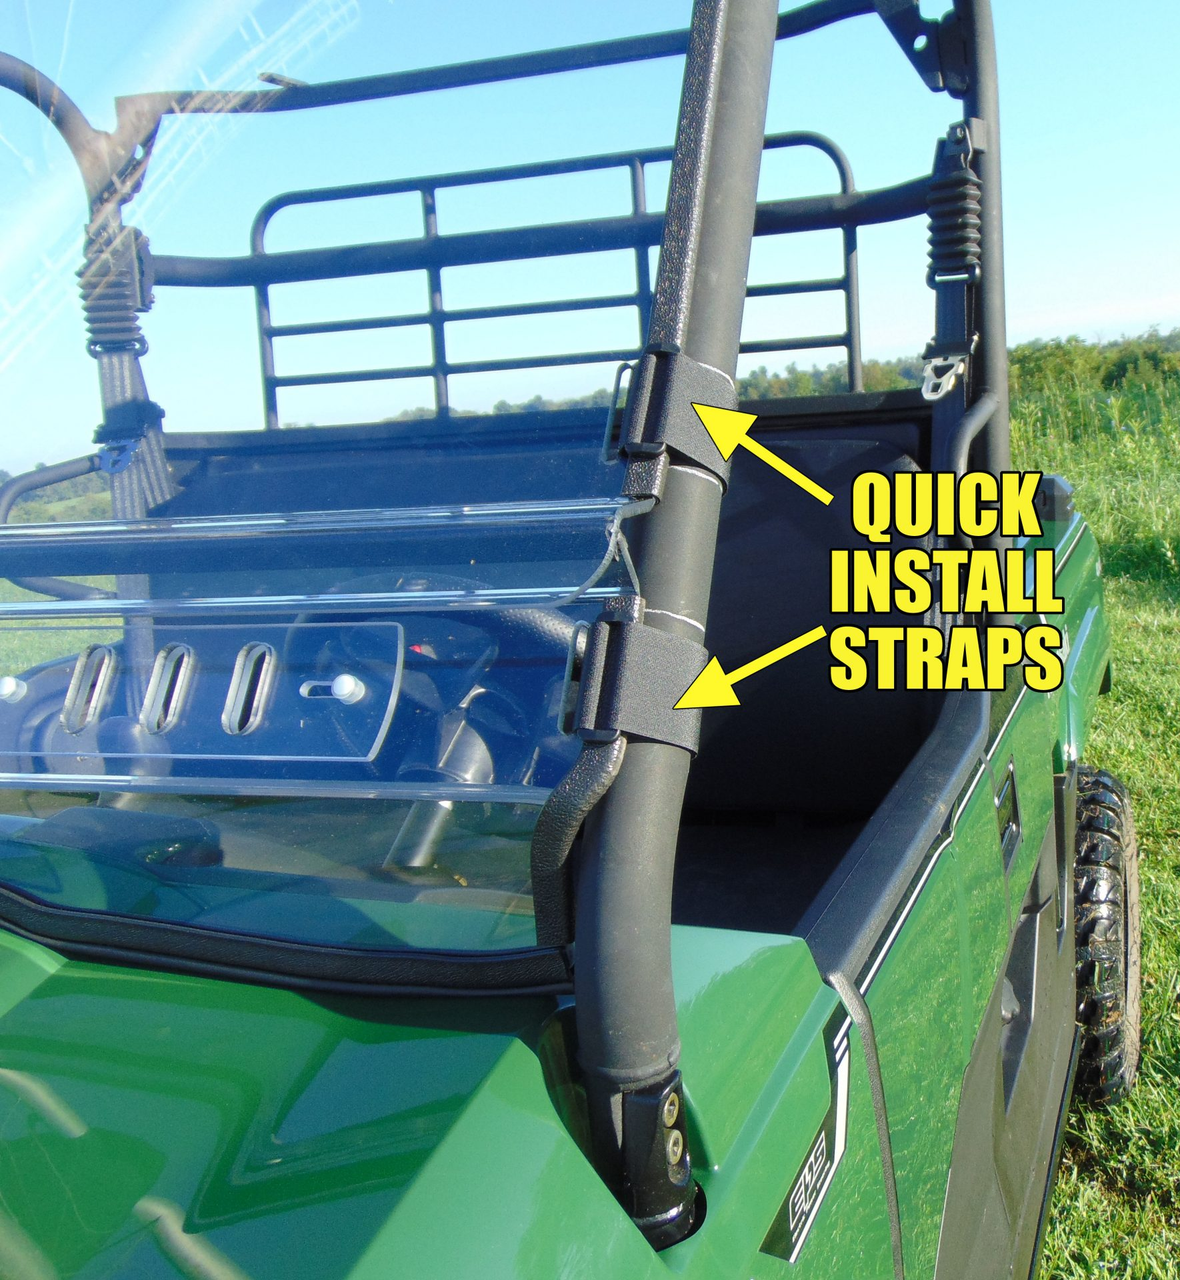 3 Star side x side Intimidator GC1K windshield quick install straps